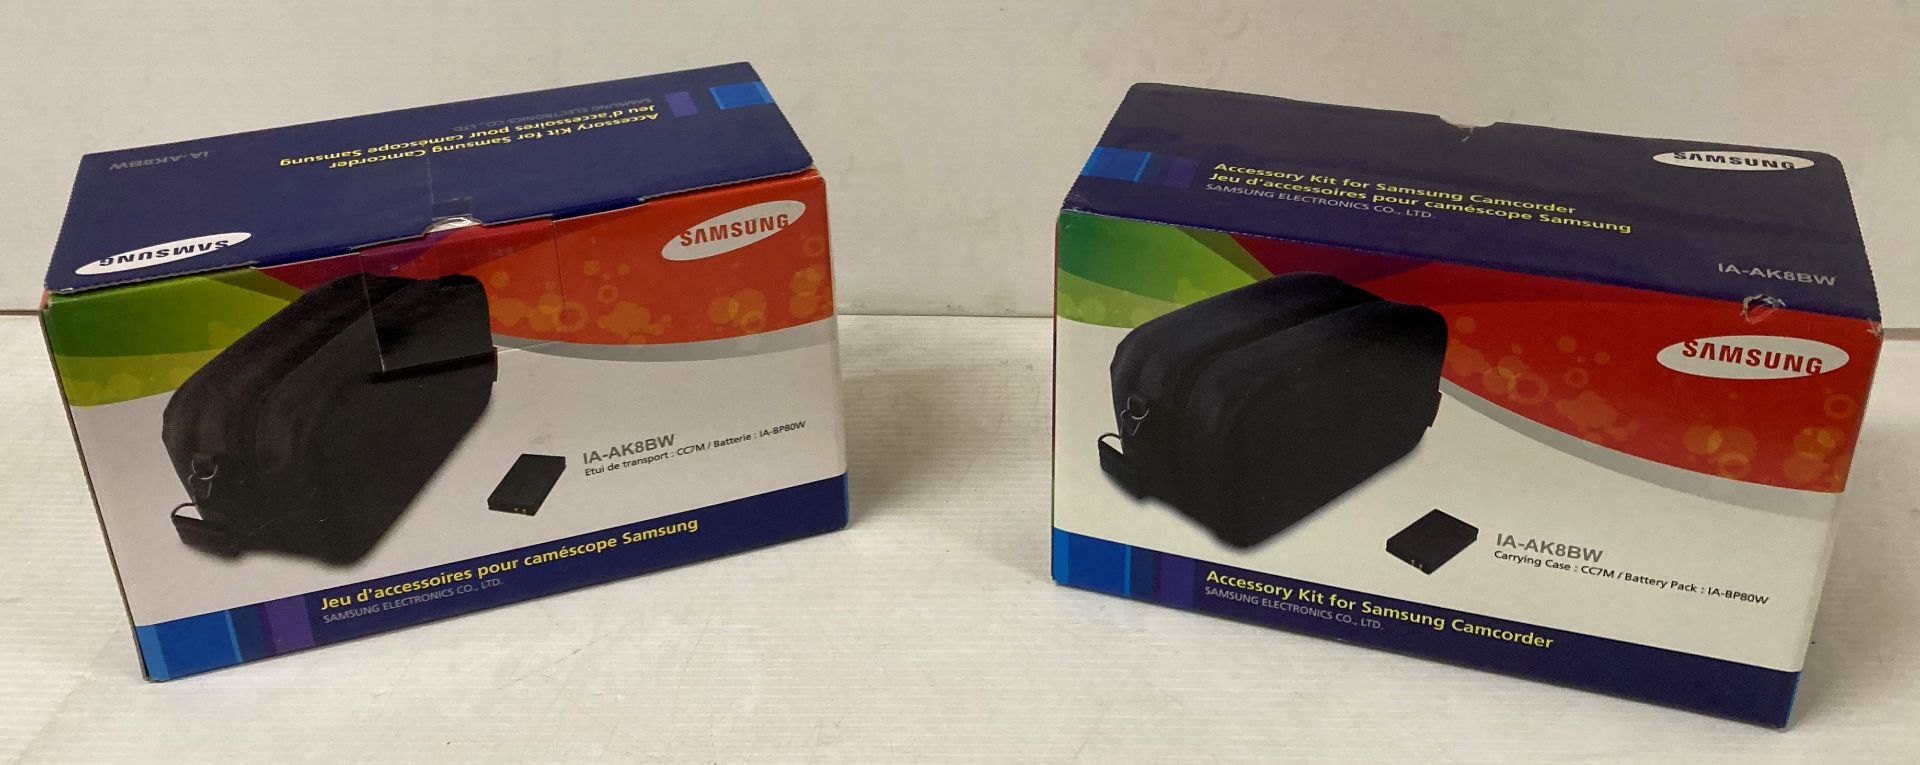 20 x Samsung accessory kits for Samsung camcorders (saleroom location: J12 FLOOR) Further